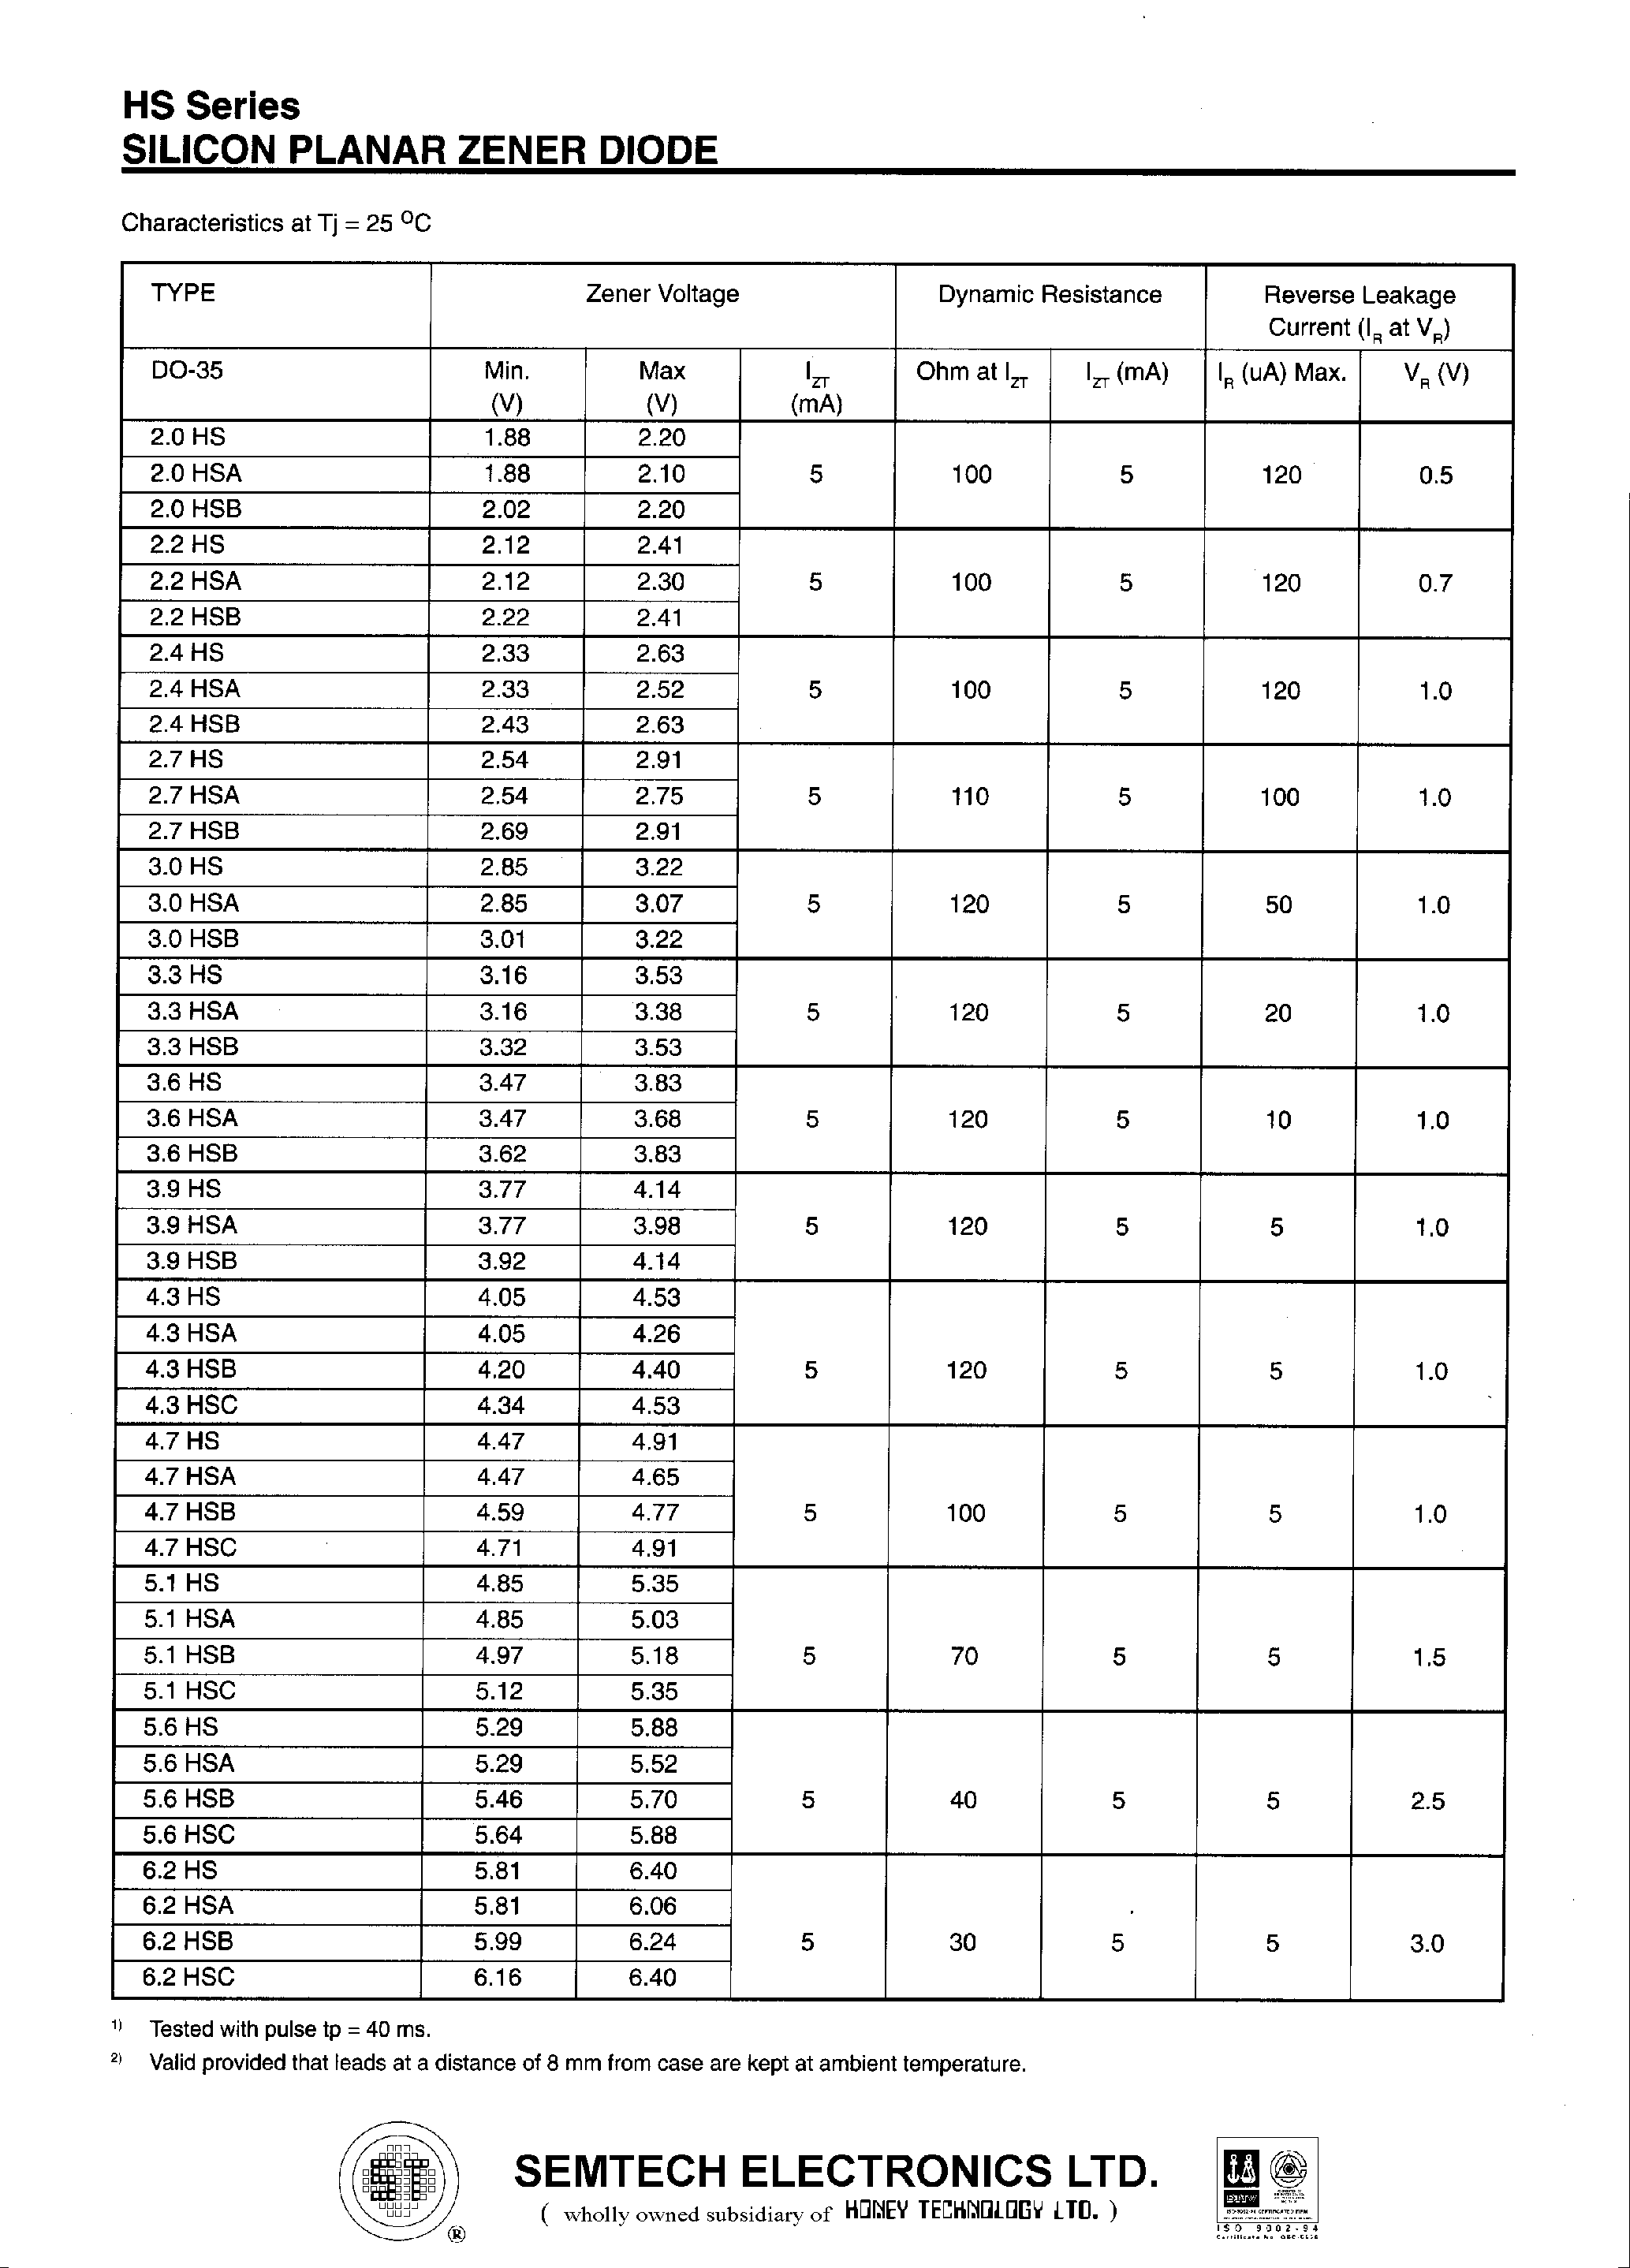 Datasheet 6.8HSC - SILICON PLANAR ZENER DIODE page 2